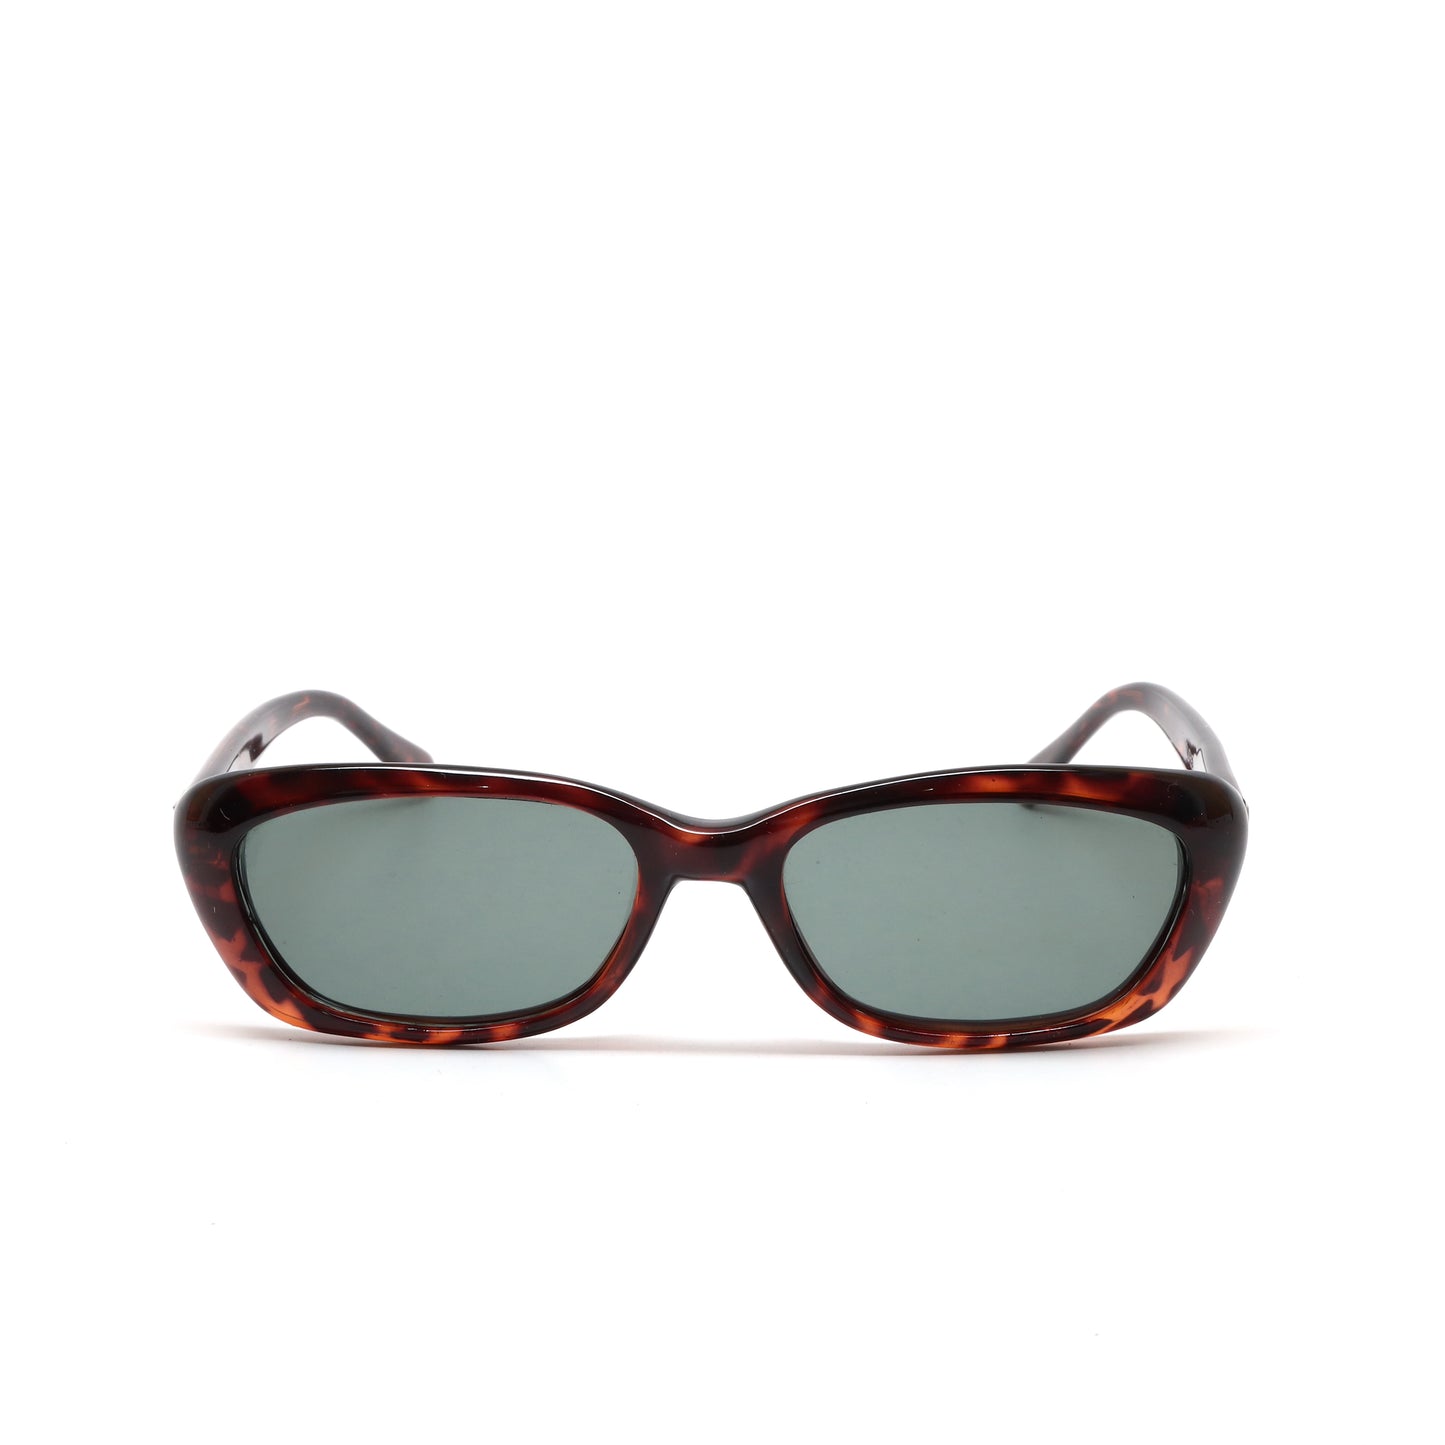 Vintage Small Sized 90s Mod Original Rectangle Sunglasses - Tortoise Red